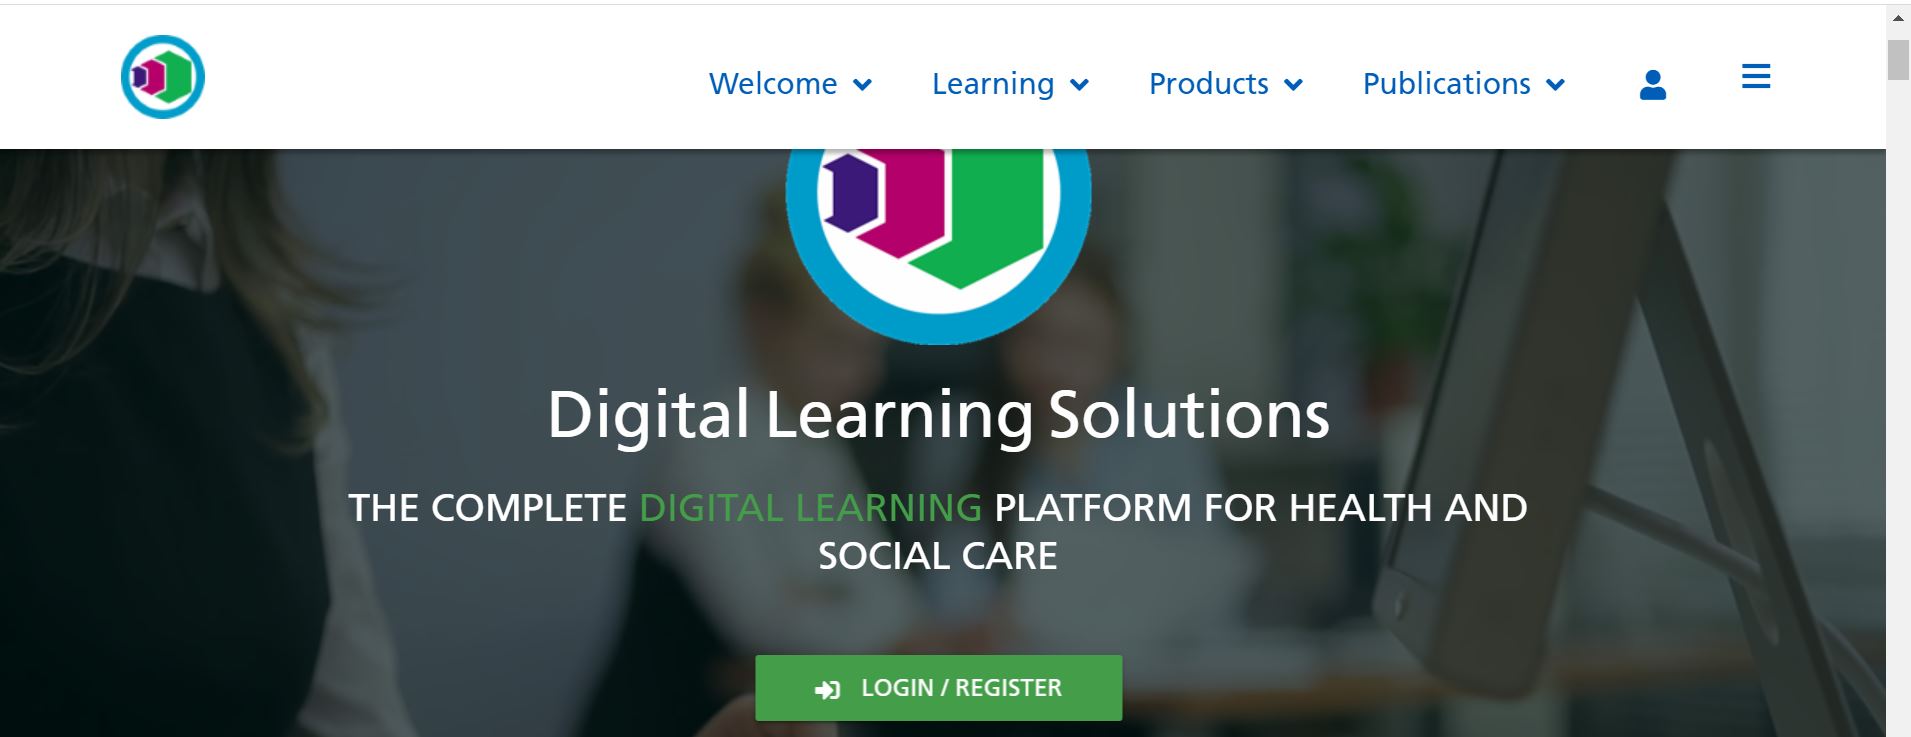 Digital Learning Solutions 2.JPG